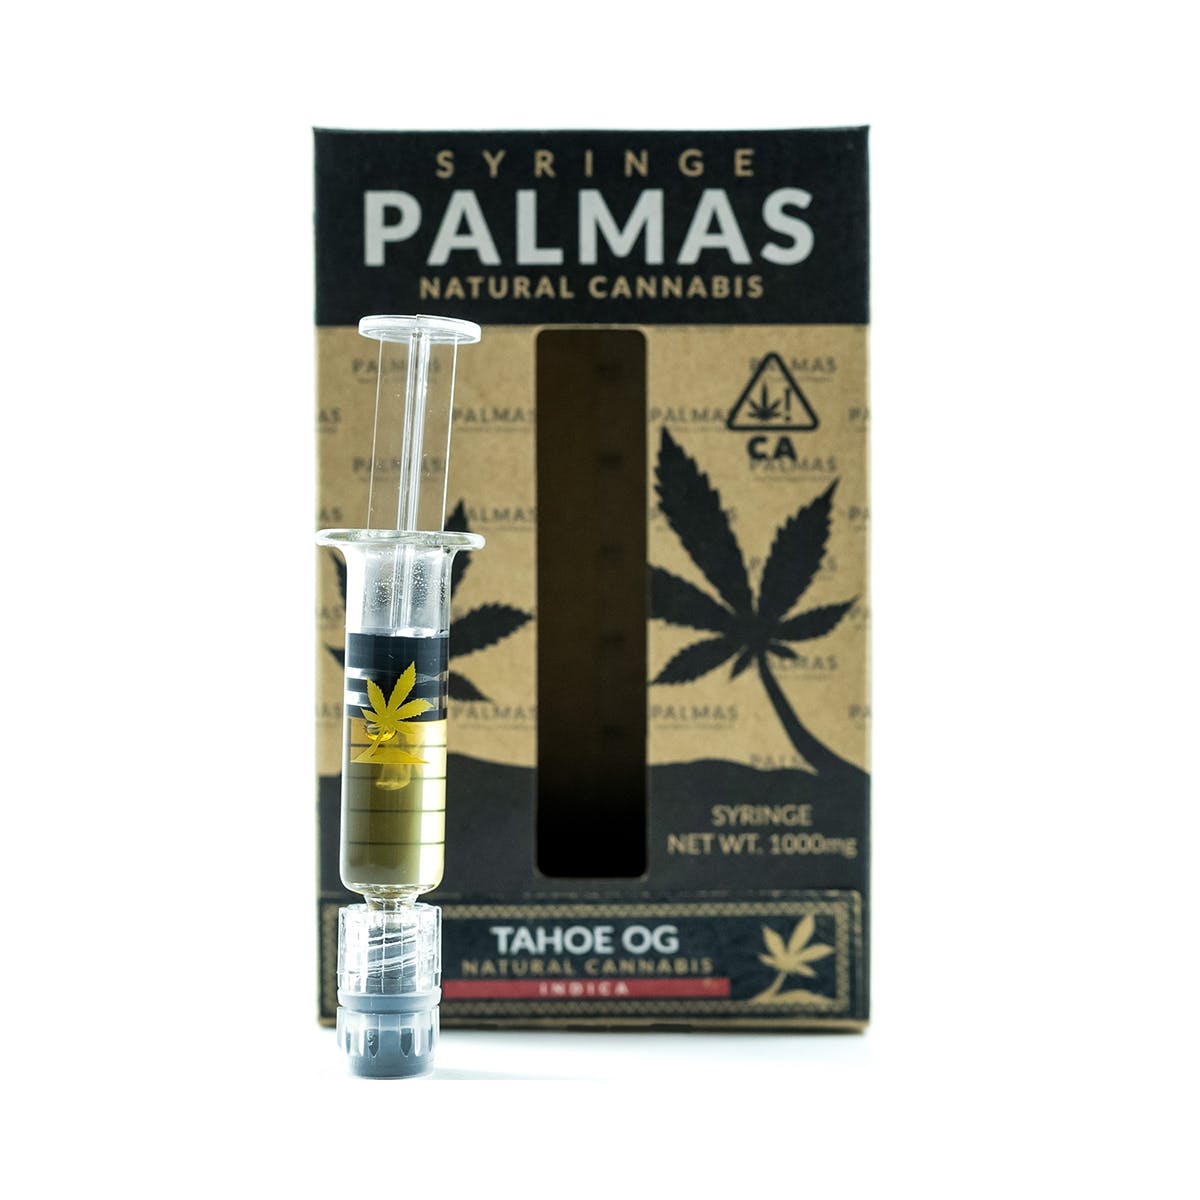 concentrate-palmas-cannabis-palmas-syringe-tahoe-og-1000mg